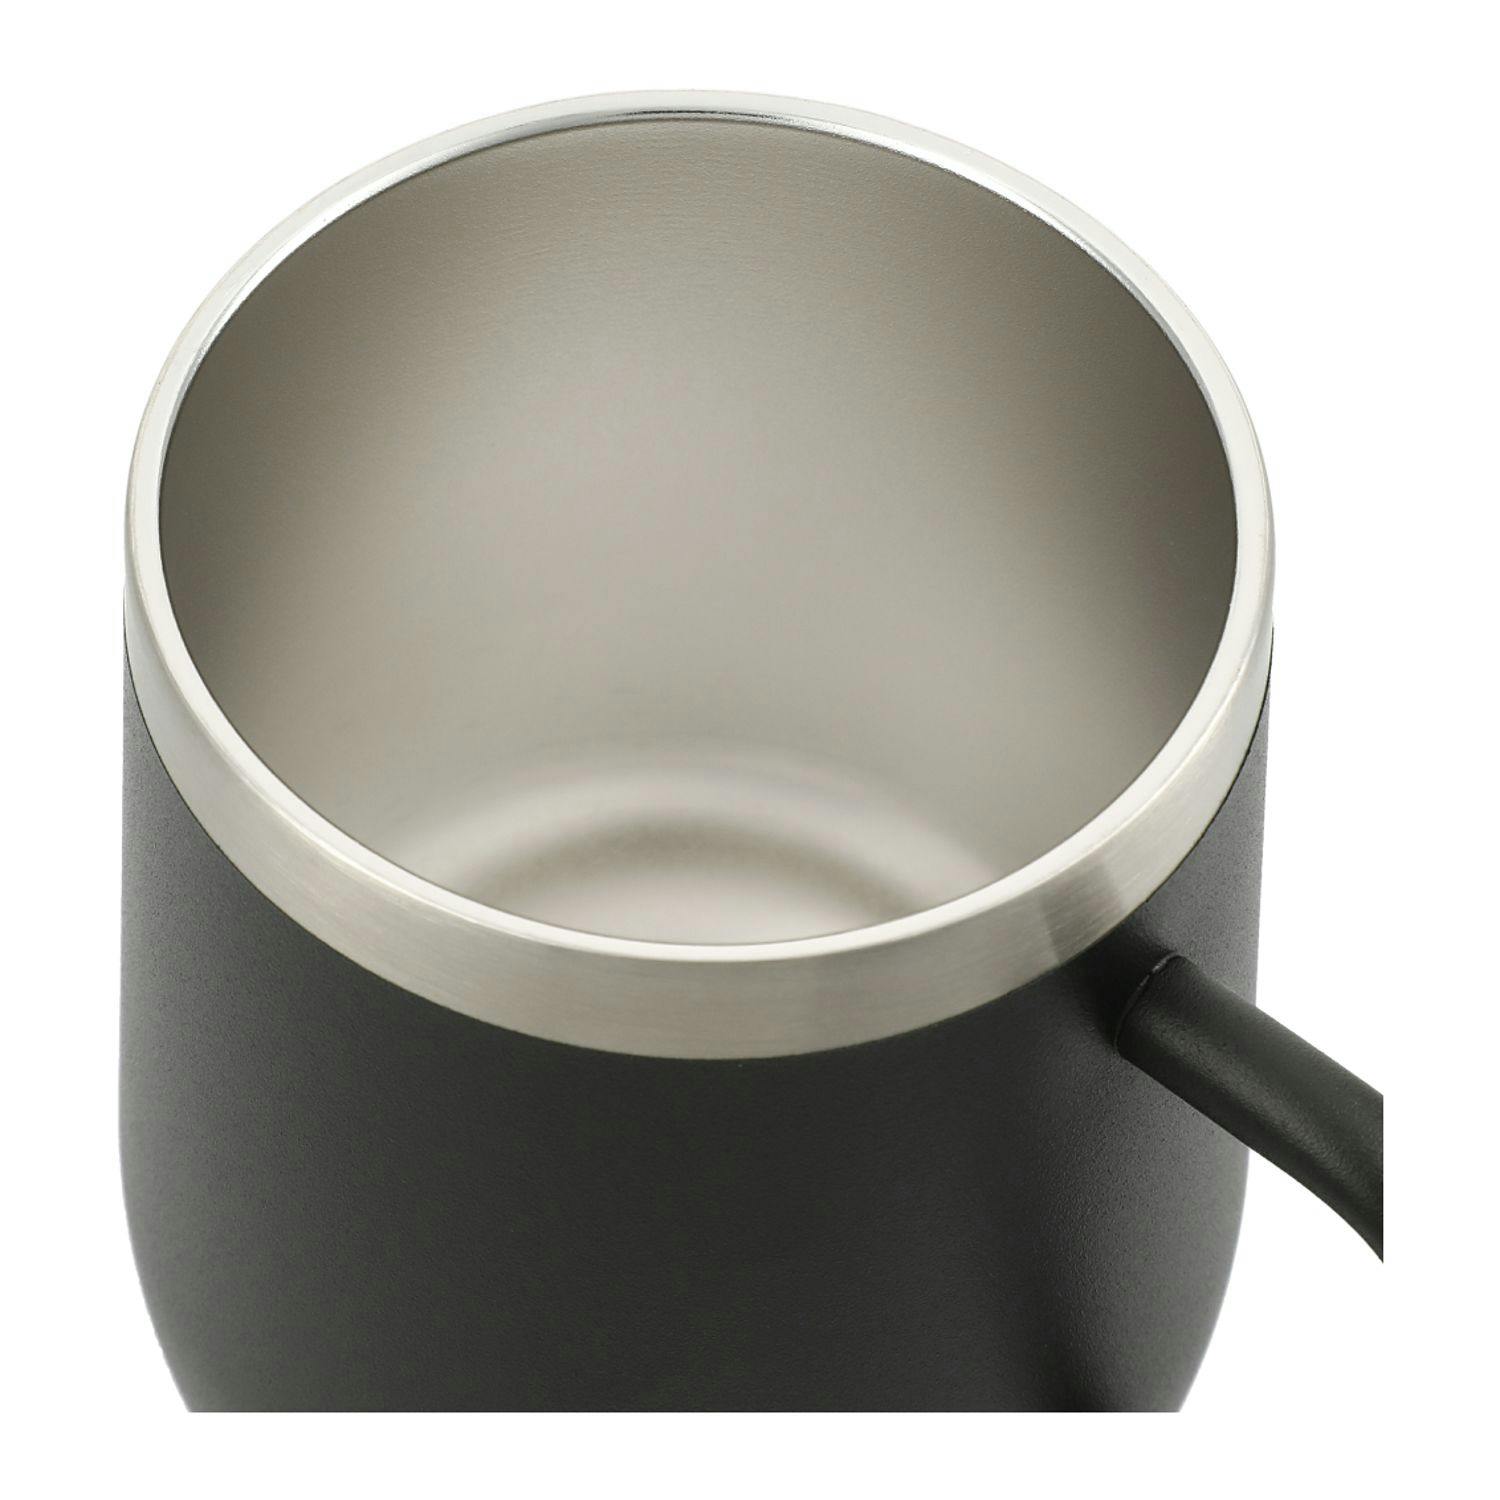 Brew Copper Vacuum Insulated Mug 12oz - additional Image 2